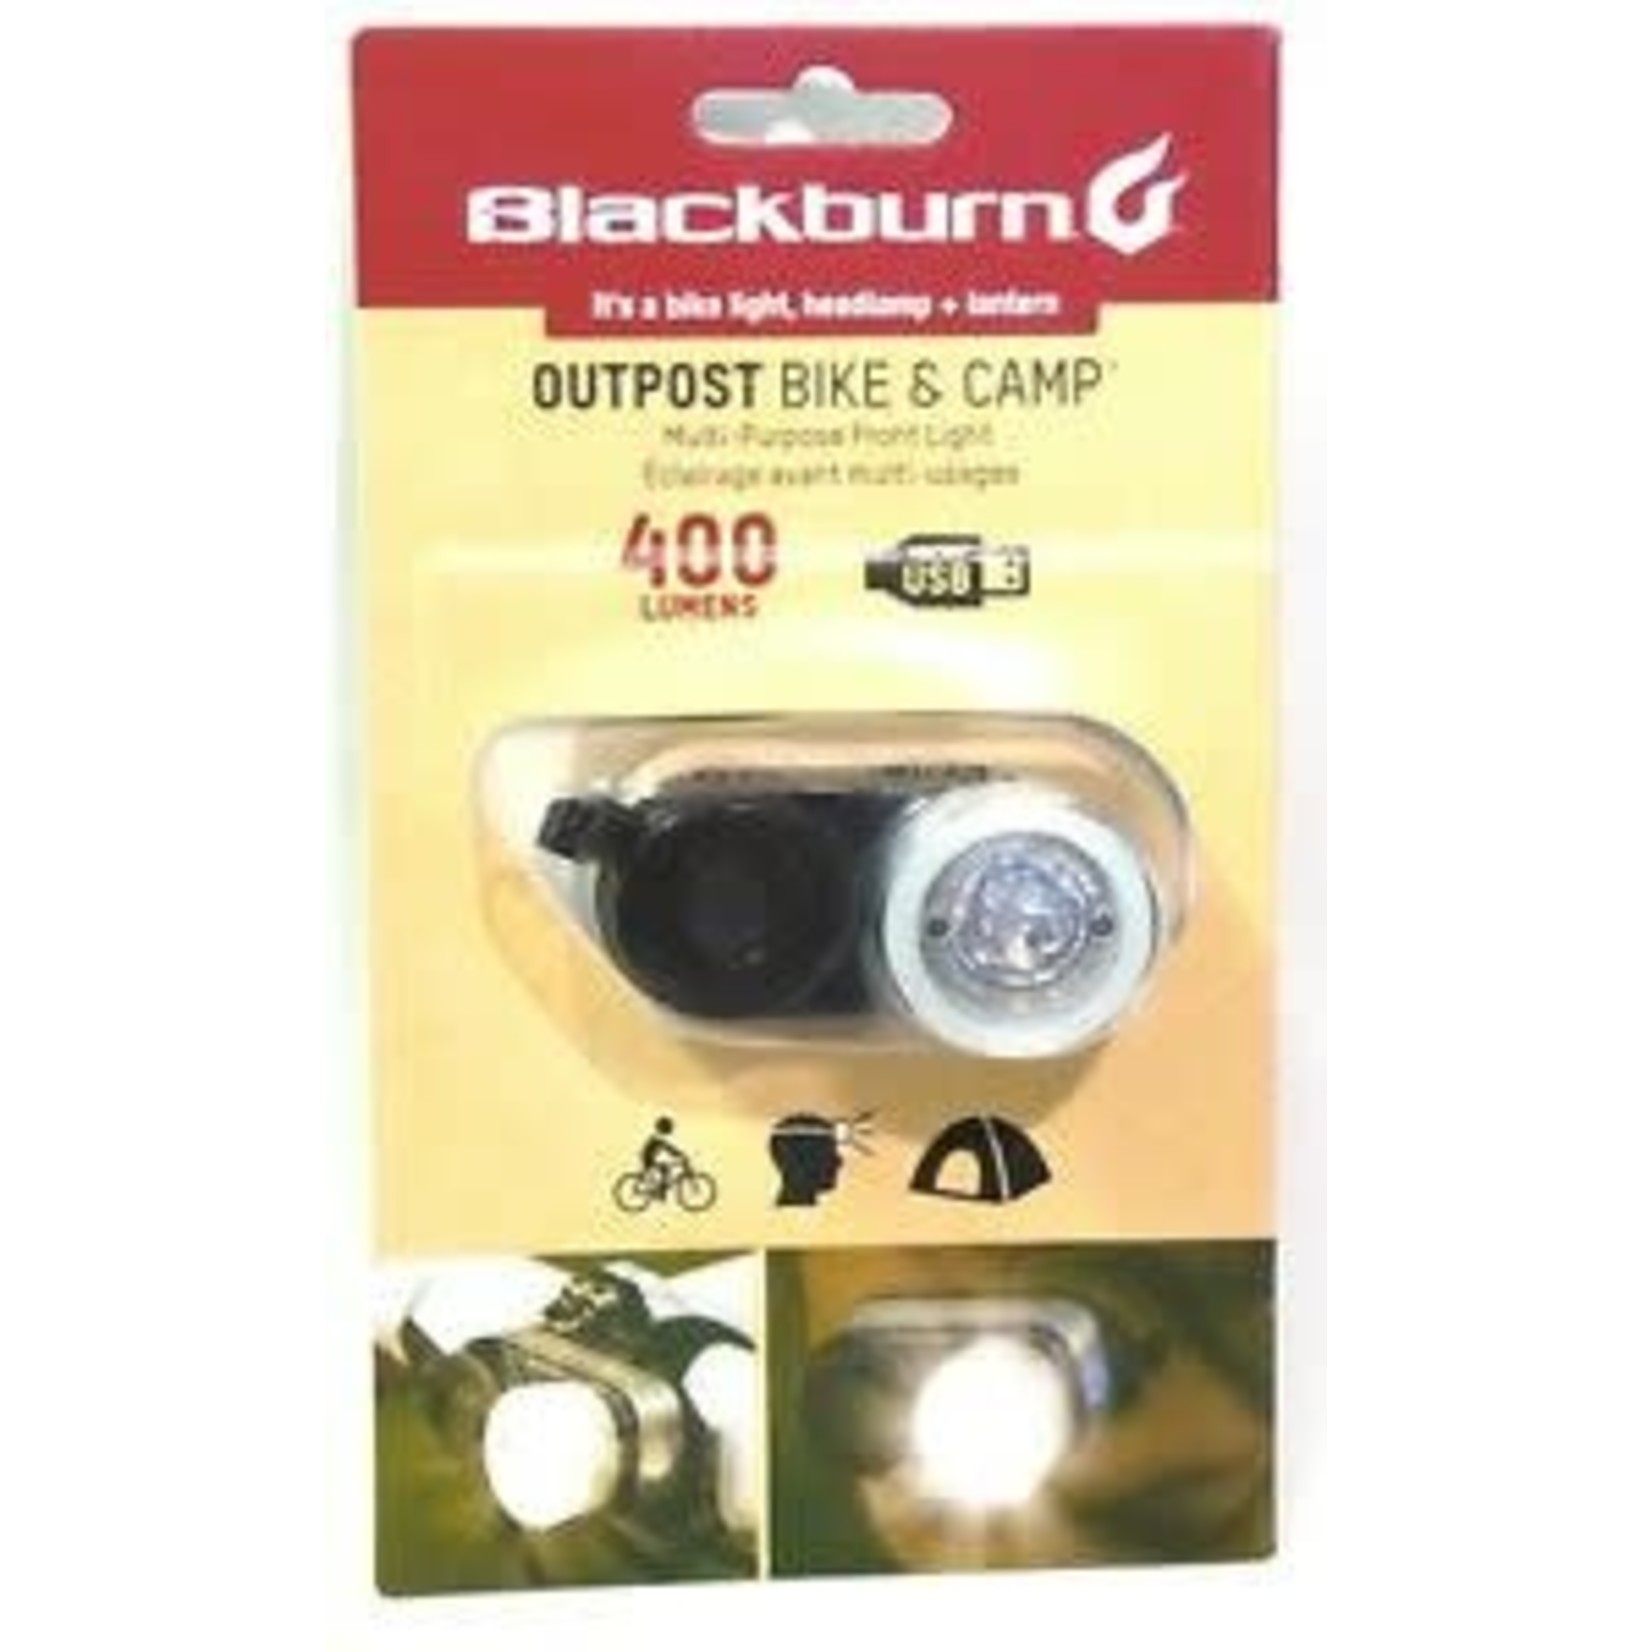 BB Light OUTPOST BIKE & CAMP